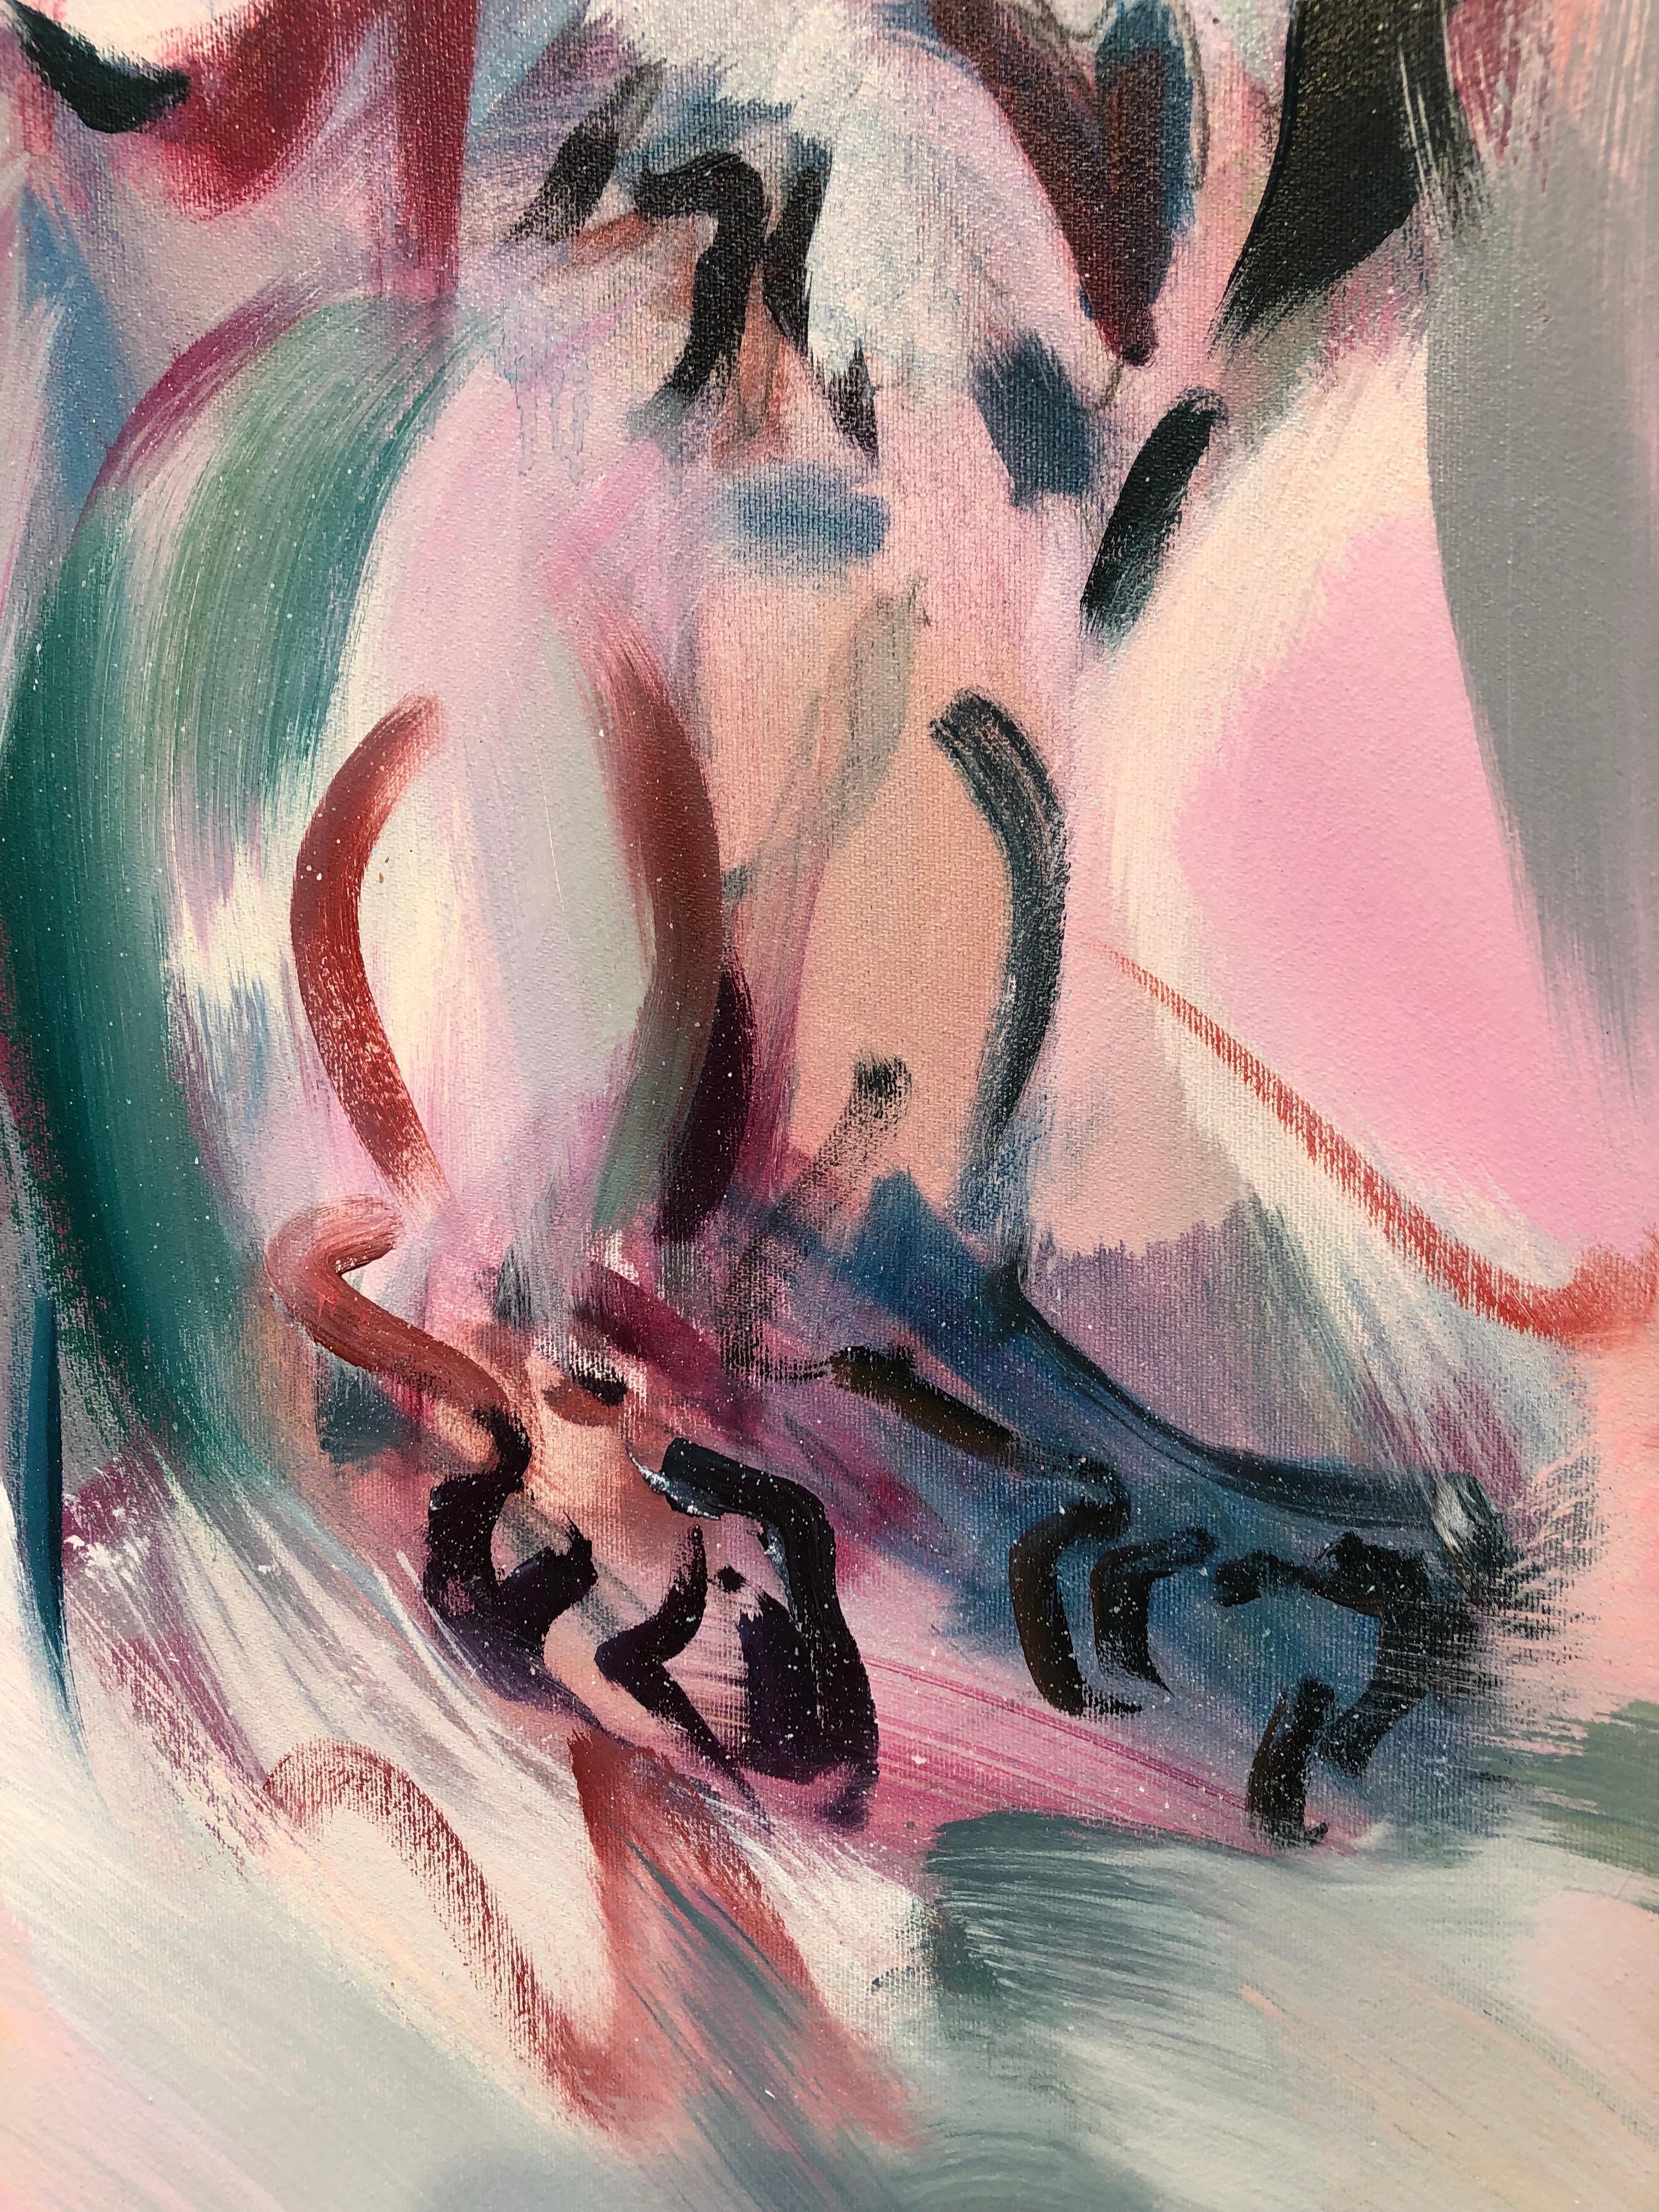 Elysium Flats, Oil on Canvas, 78